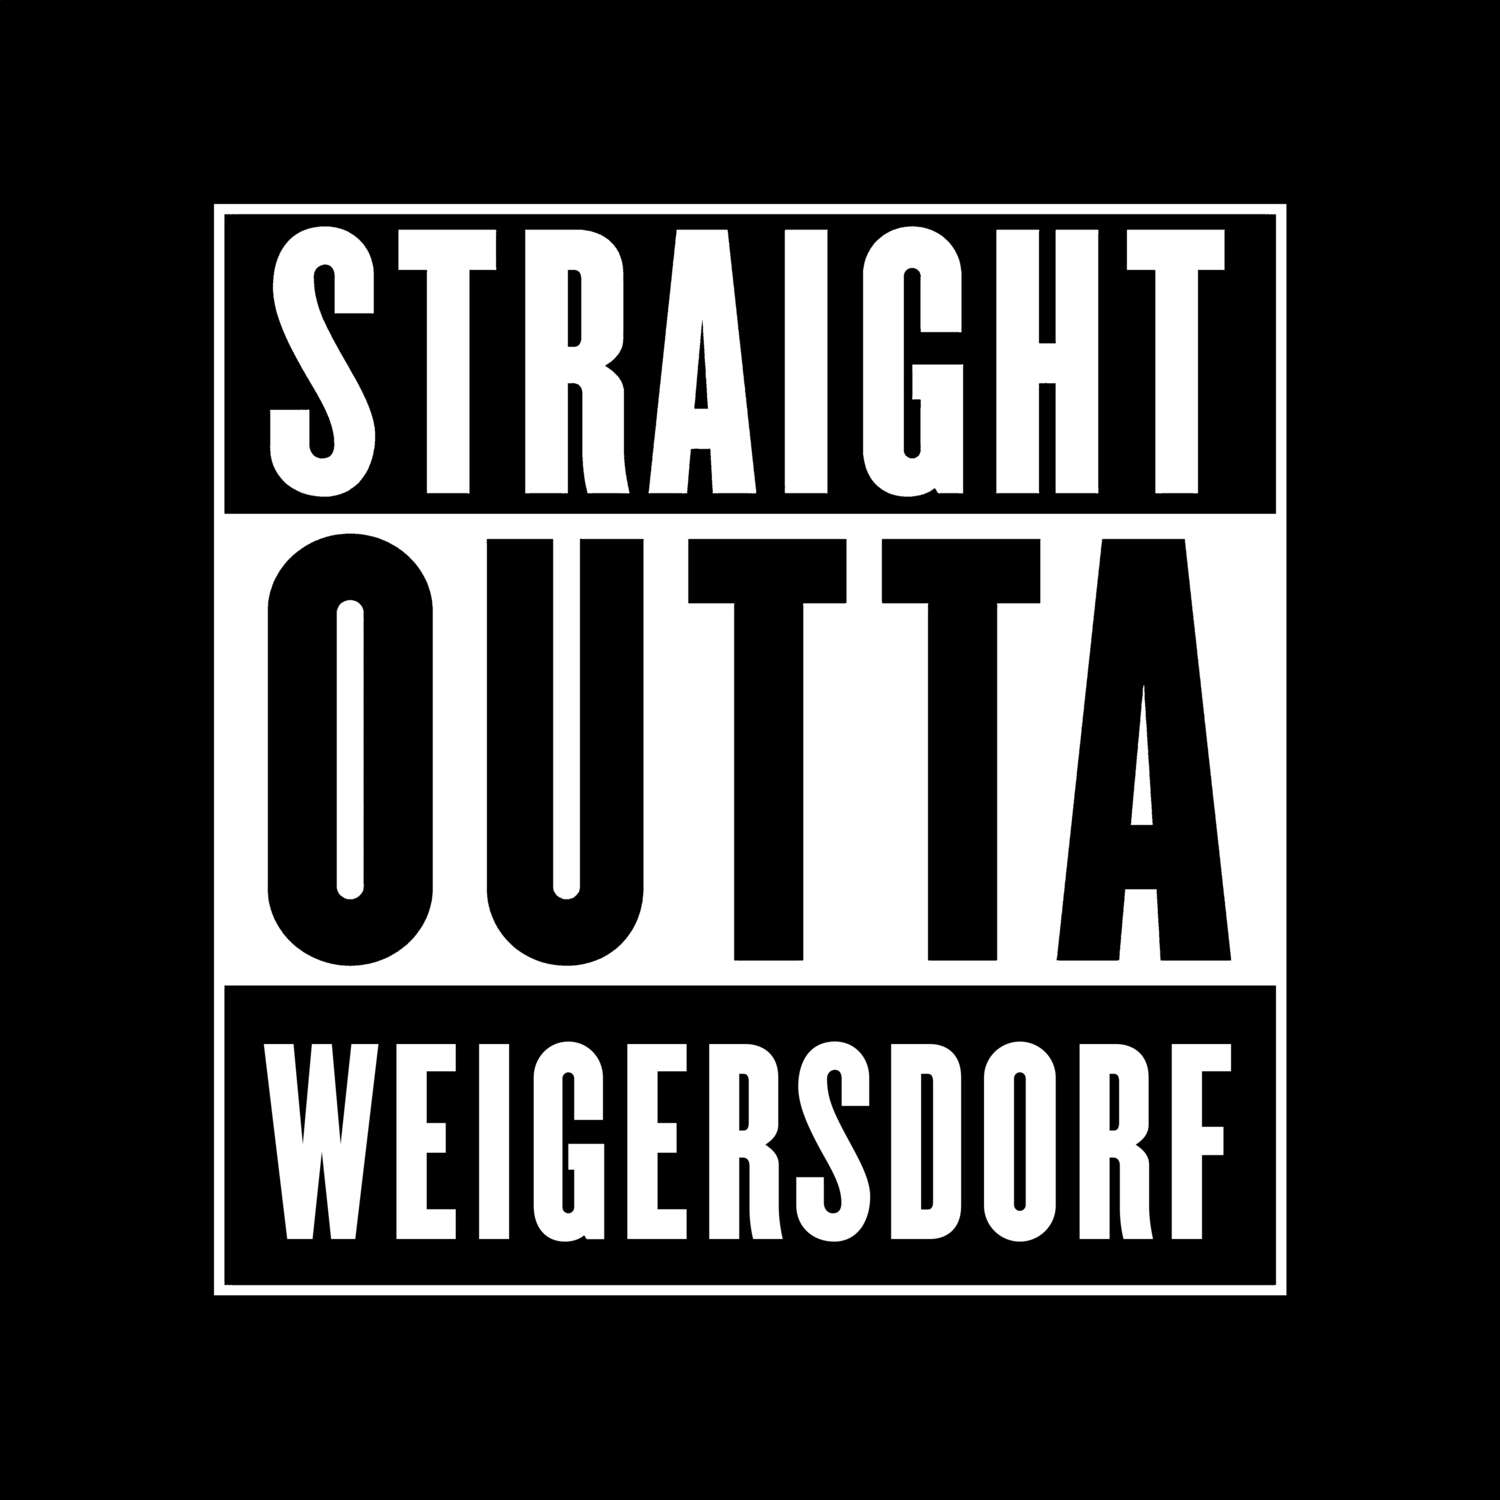 Weigersdorf T-Shirt »Straight Outta«